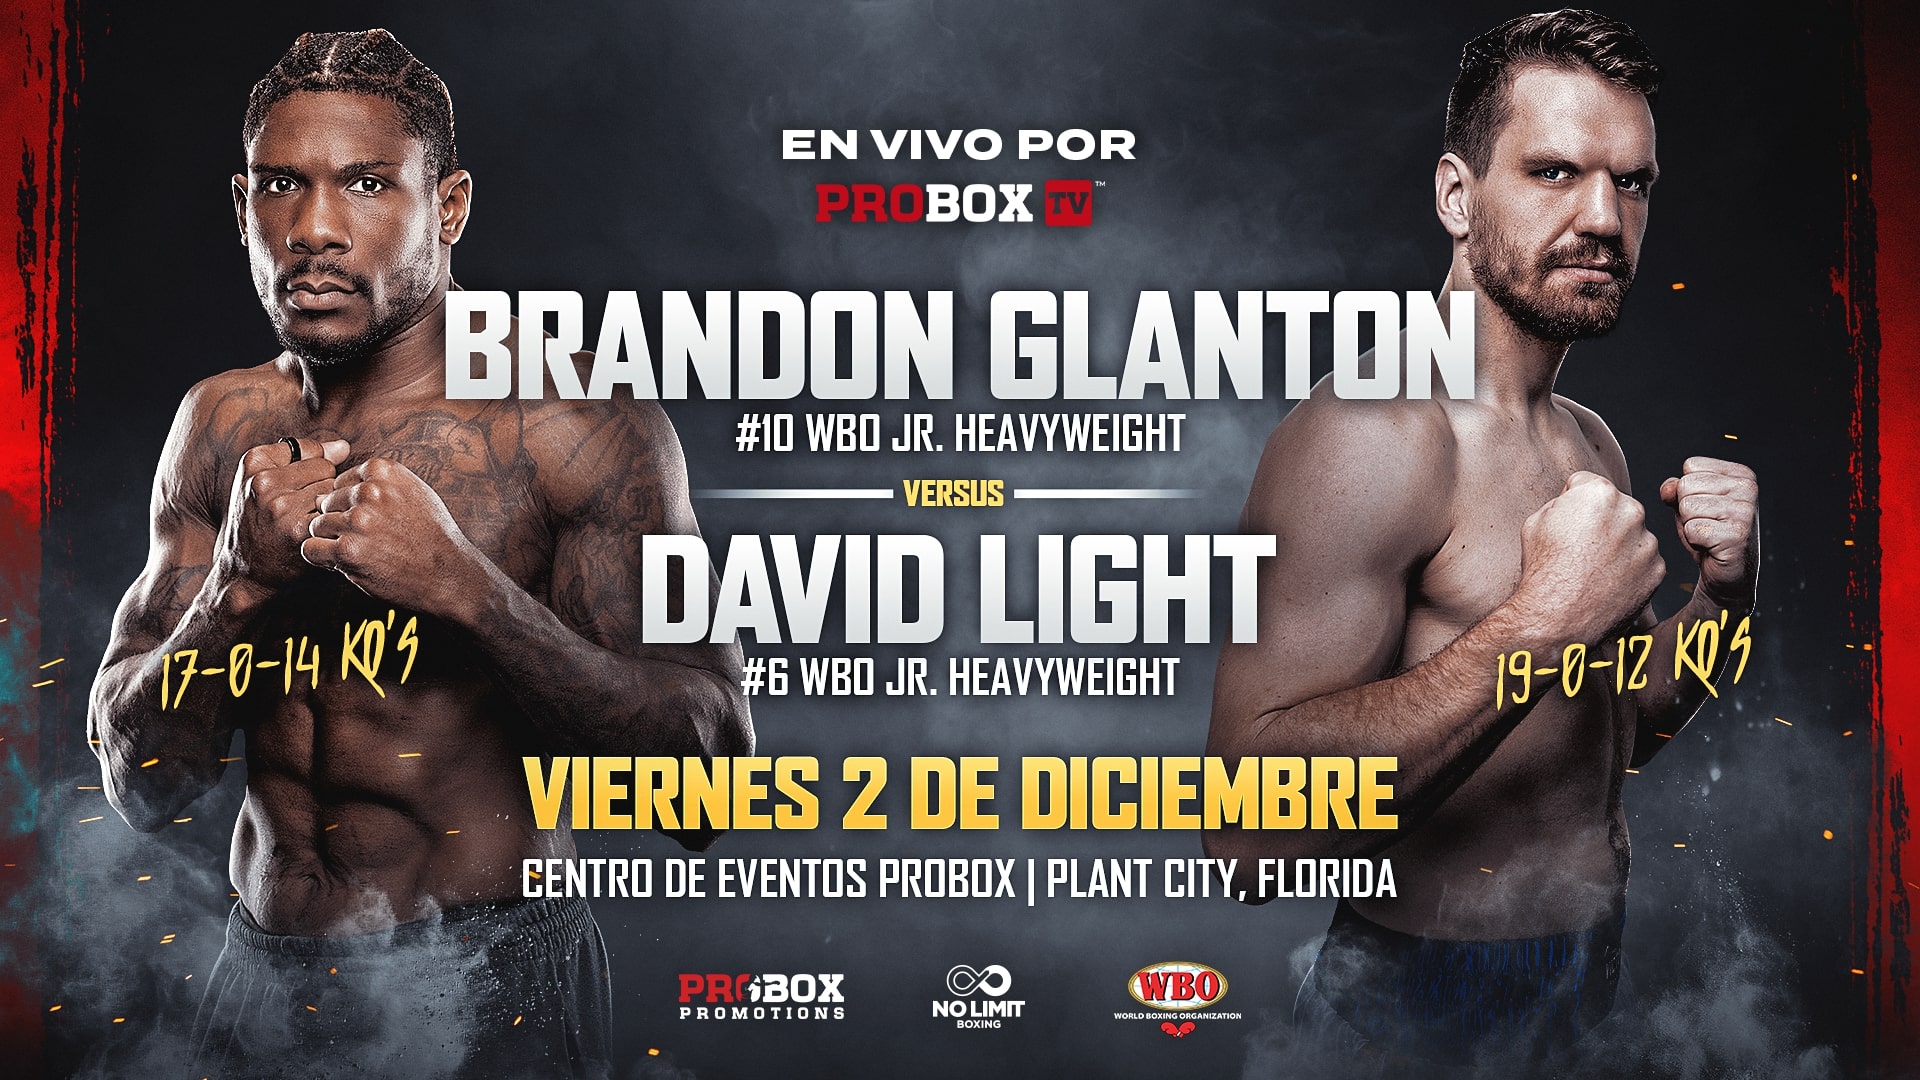 Brandon Glanton vs David Light December 2nd at ProBox Event Center in Plant City, Florida